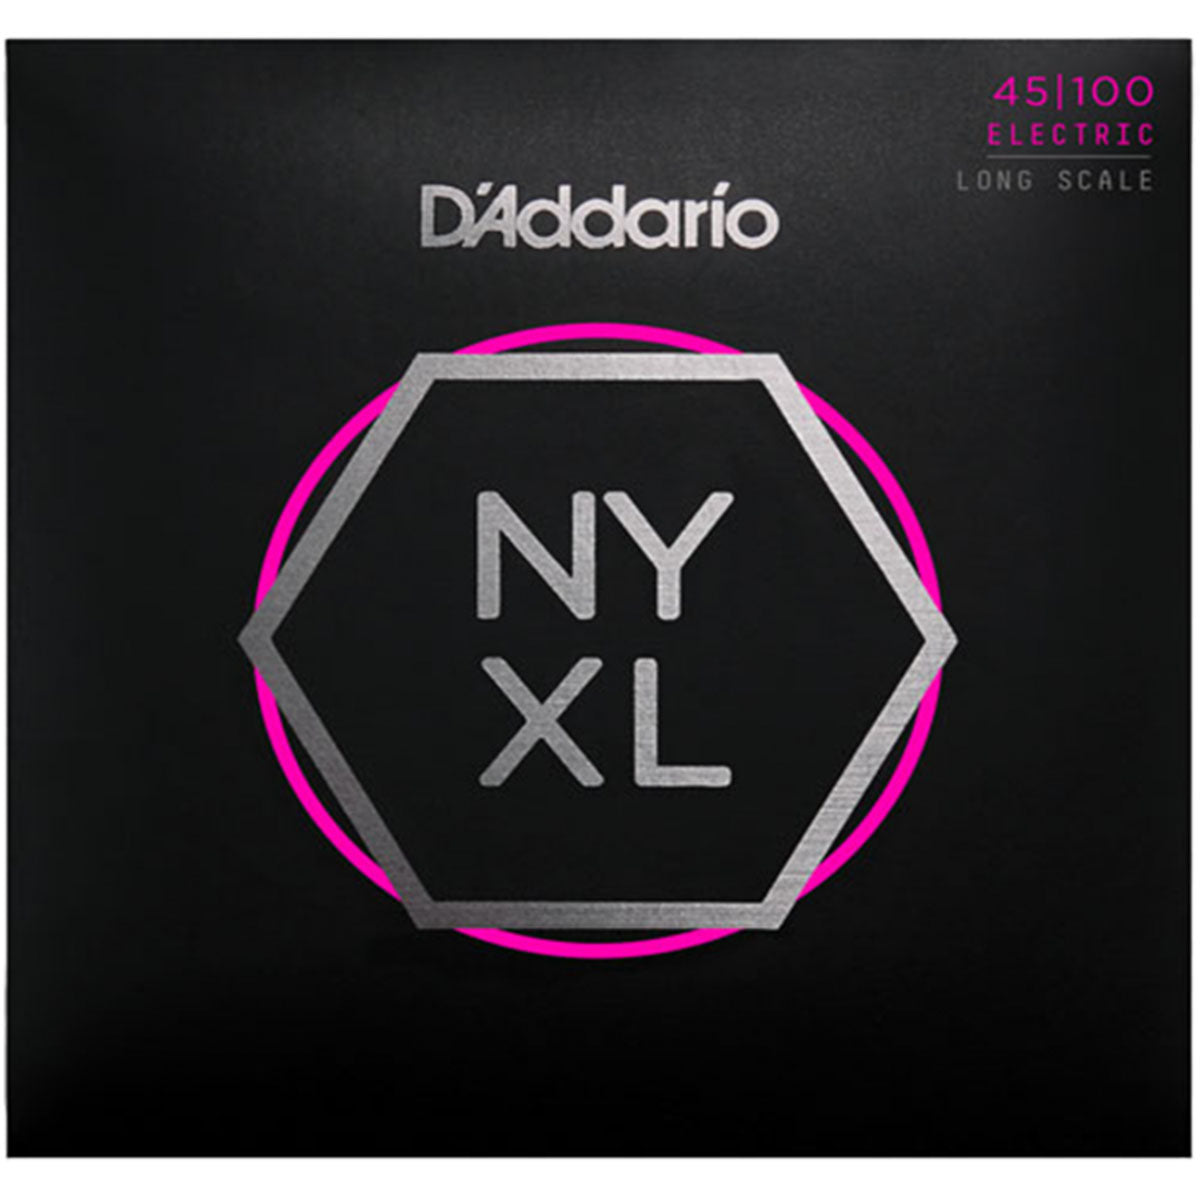 D'Addario NYXL45100 Bass Guitar Strings Nickel Wound Long Scale 45-100 Regular Light